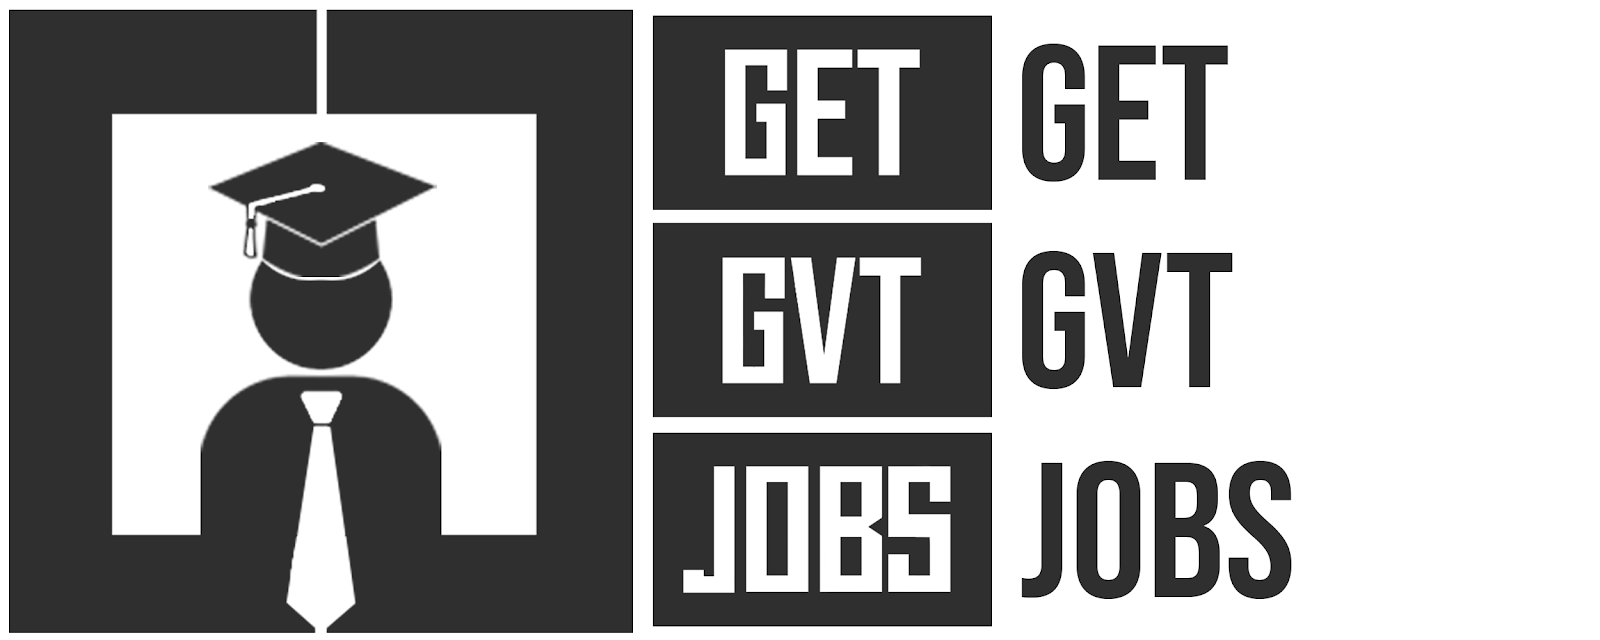 Latest Govt Jobs Notification | Sarkari Naukri | Jobskind | GetGvtJobs